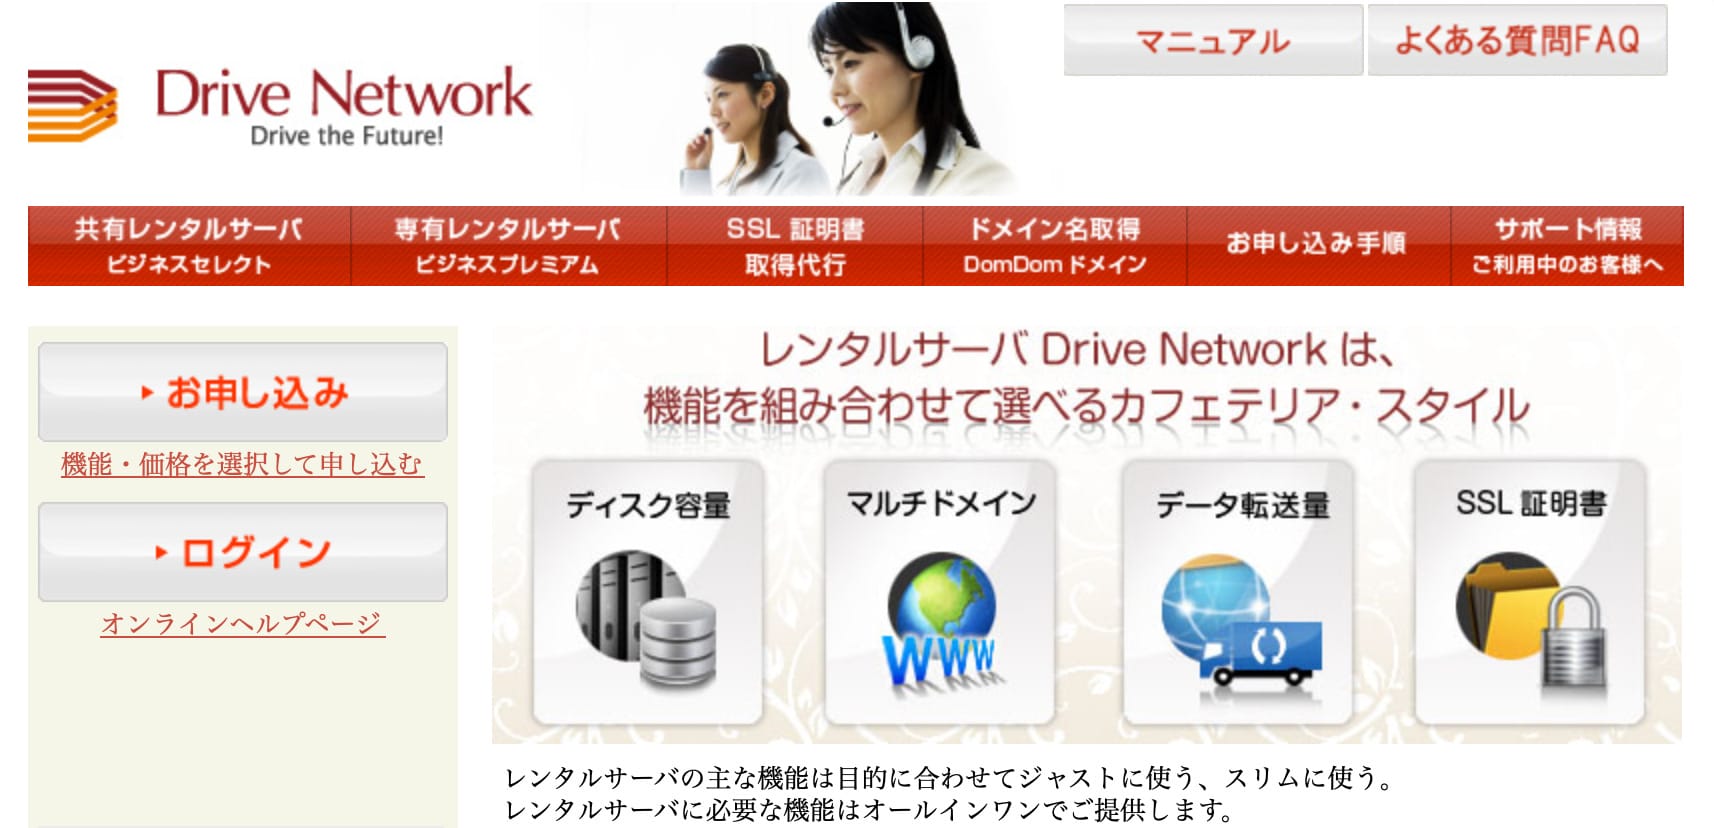 Drive Network homepage